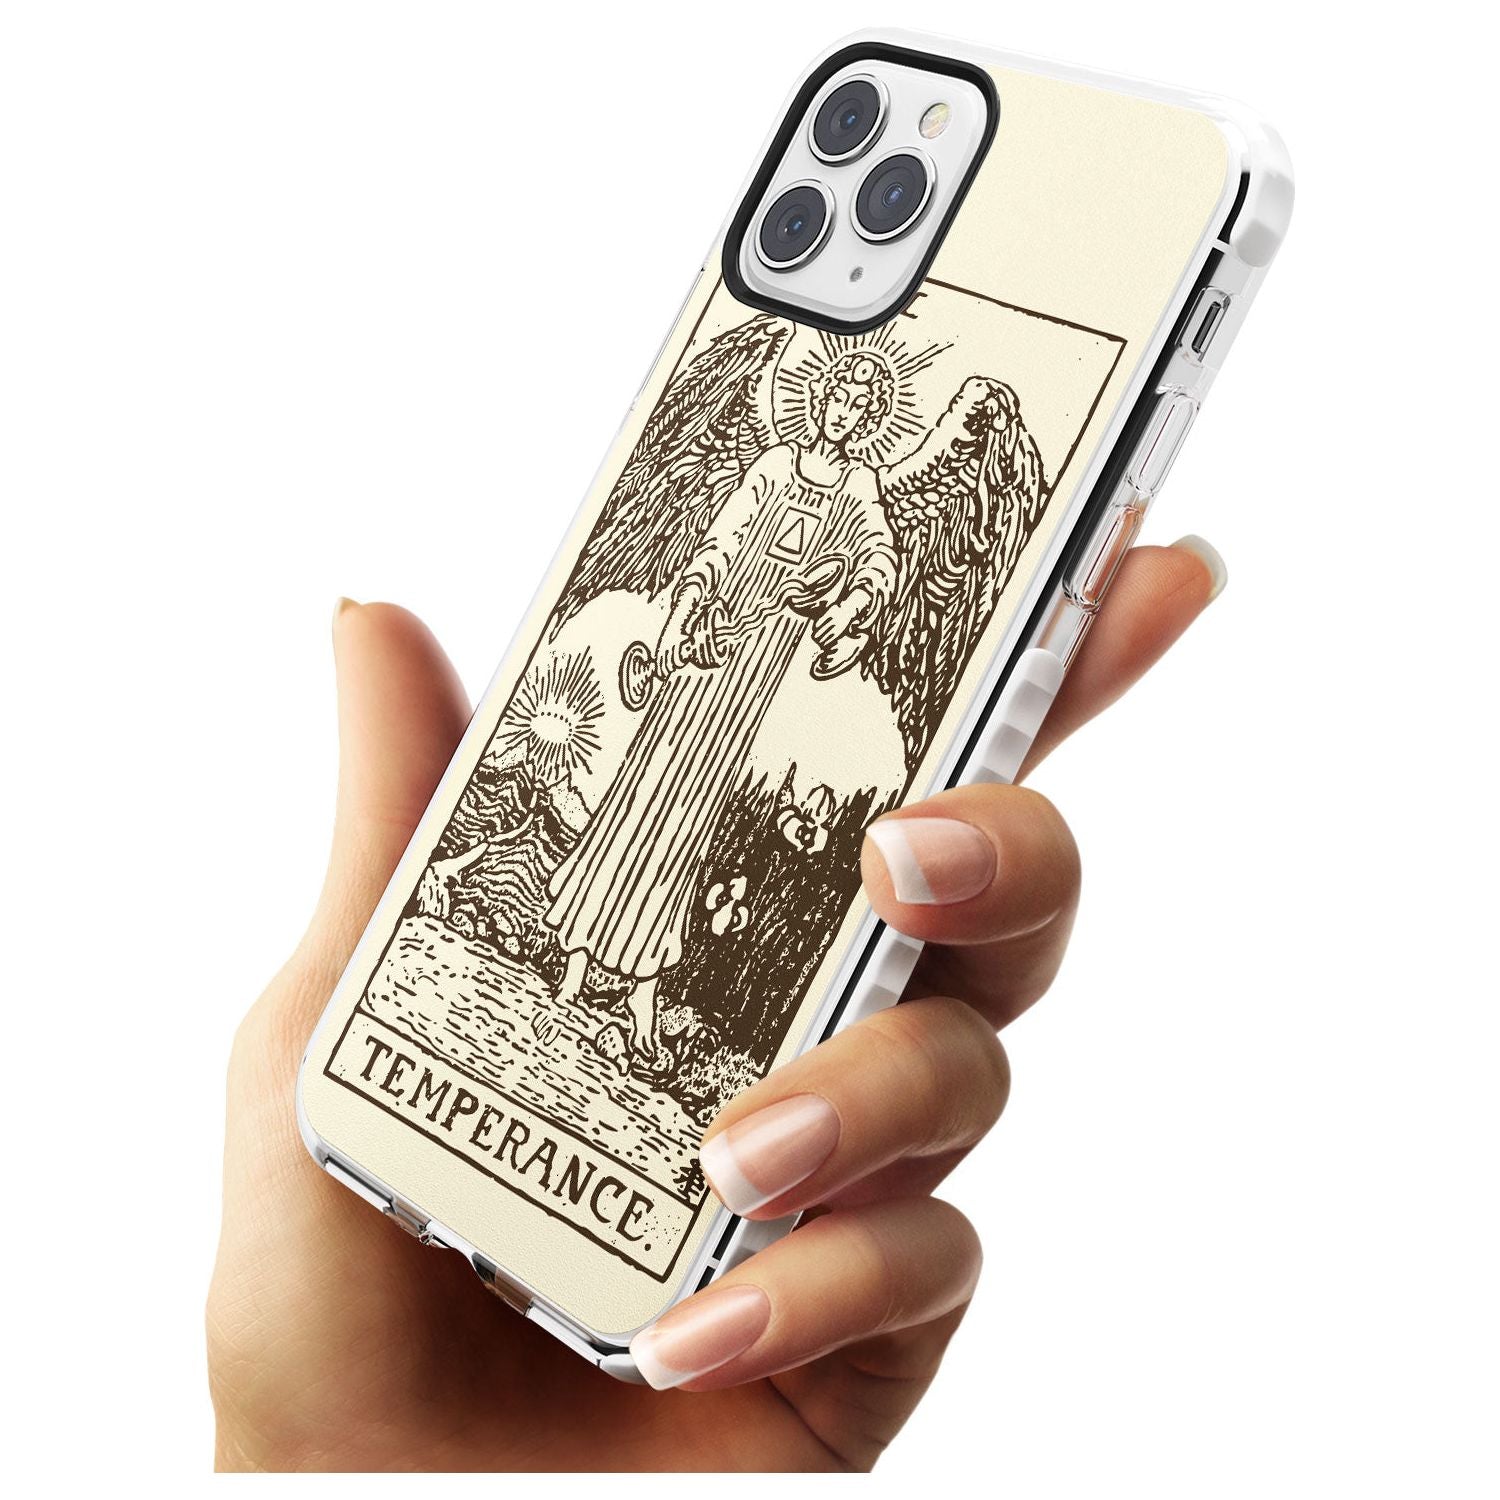 Temperance Tarot Card - Solid Cream Slim TPU Phone Case for iPhone 11 Pro Max